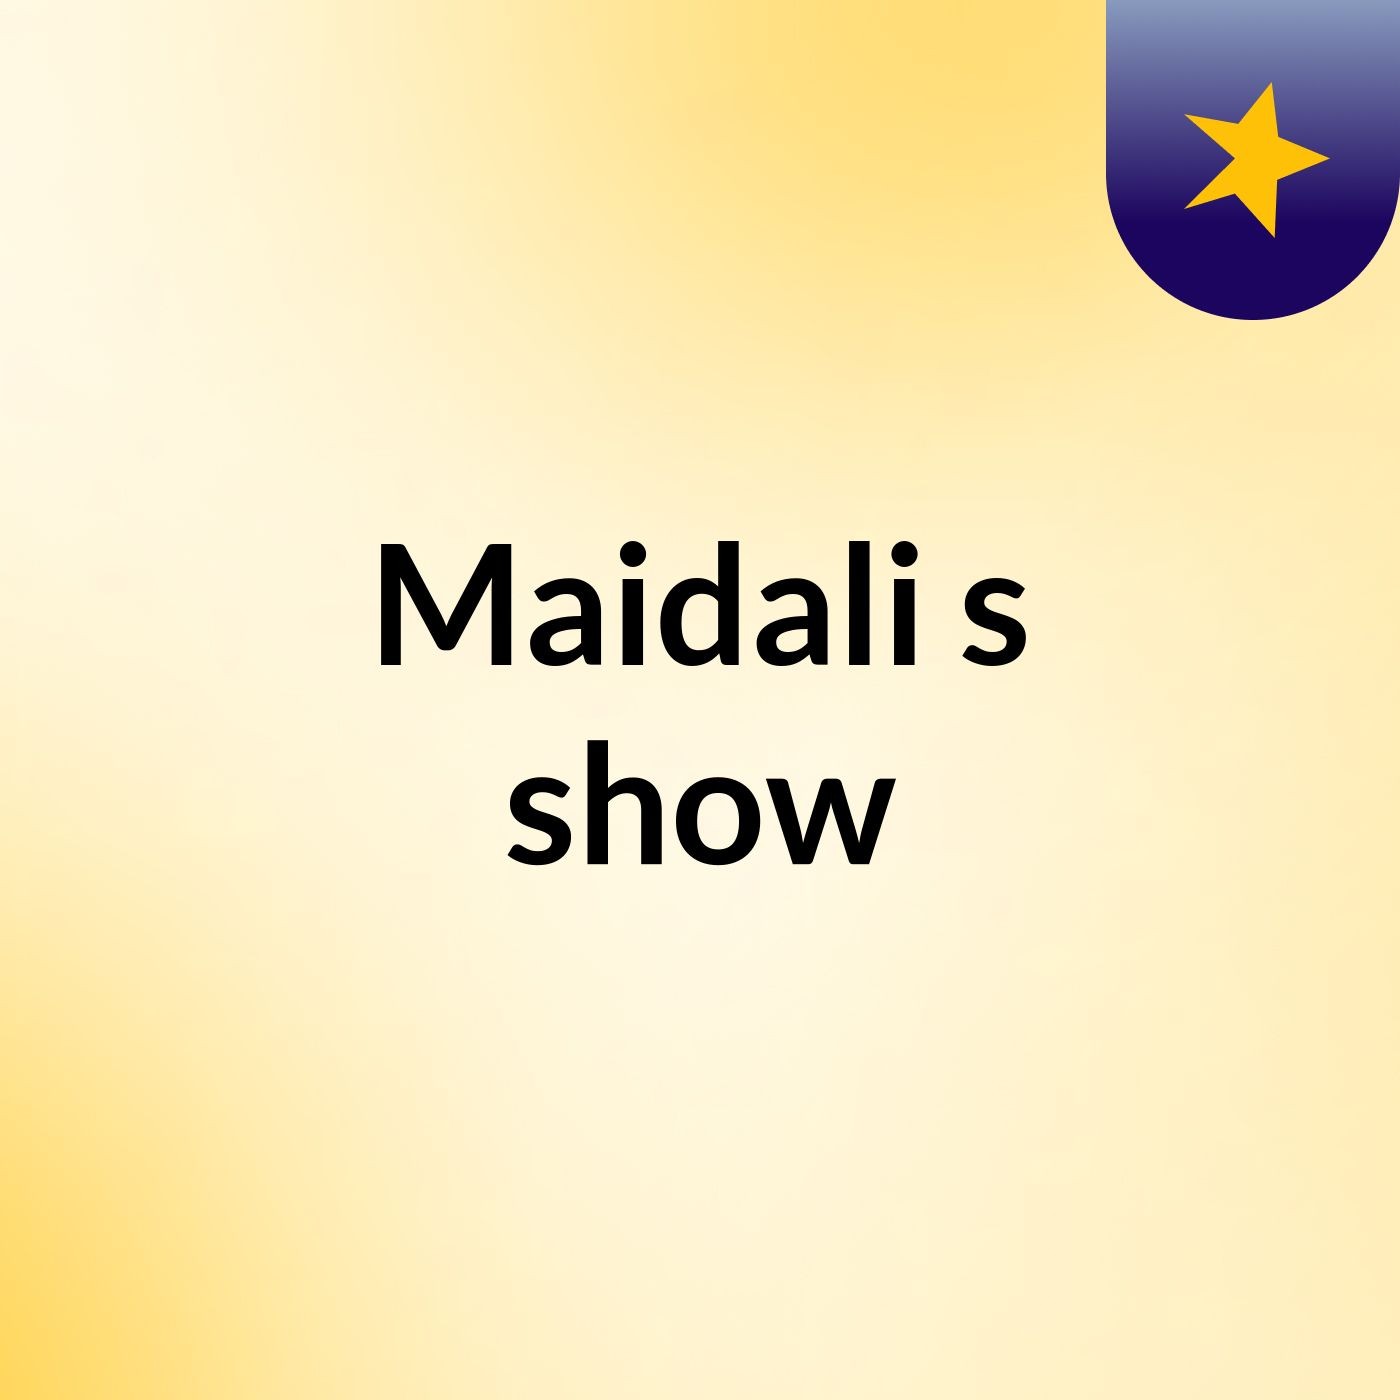 Maidali's show